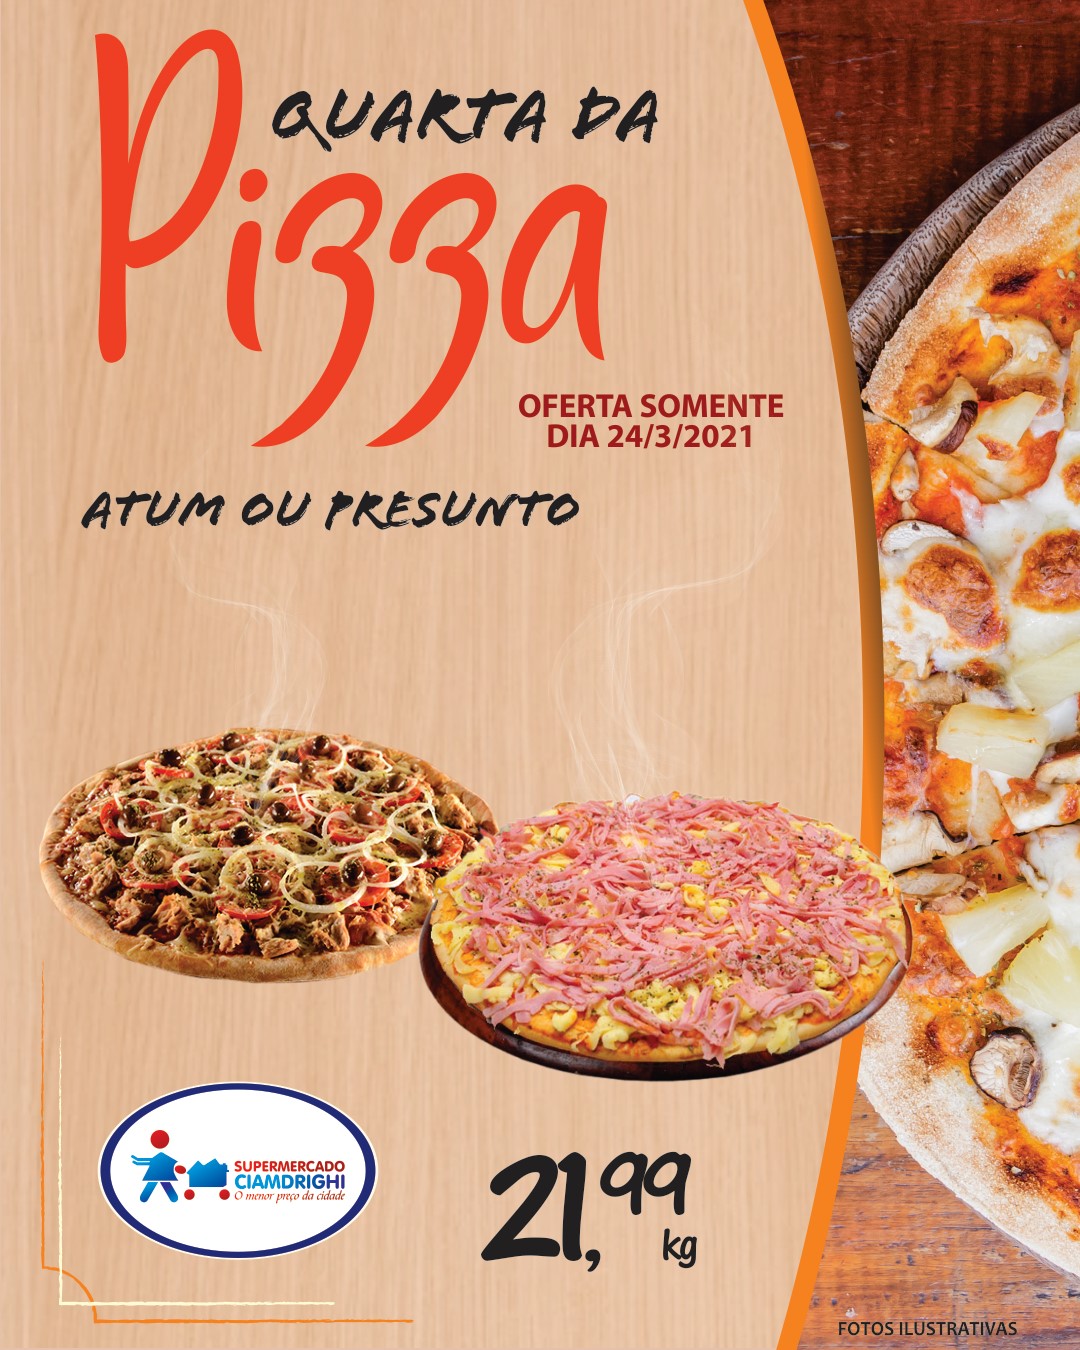 Ciamdrighi tem pizzas, hortifrúti e ofertas pelo delivery